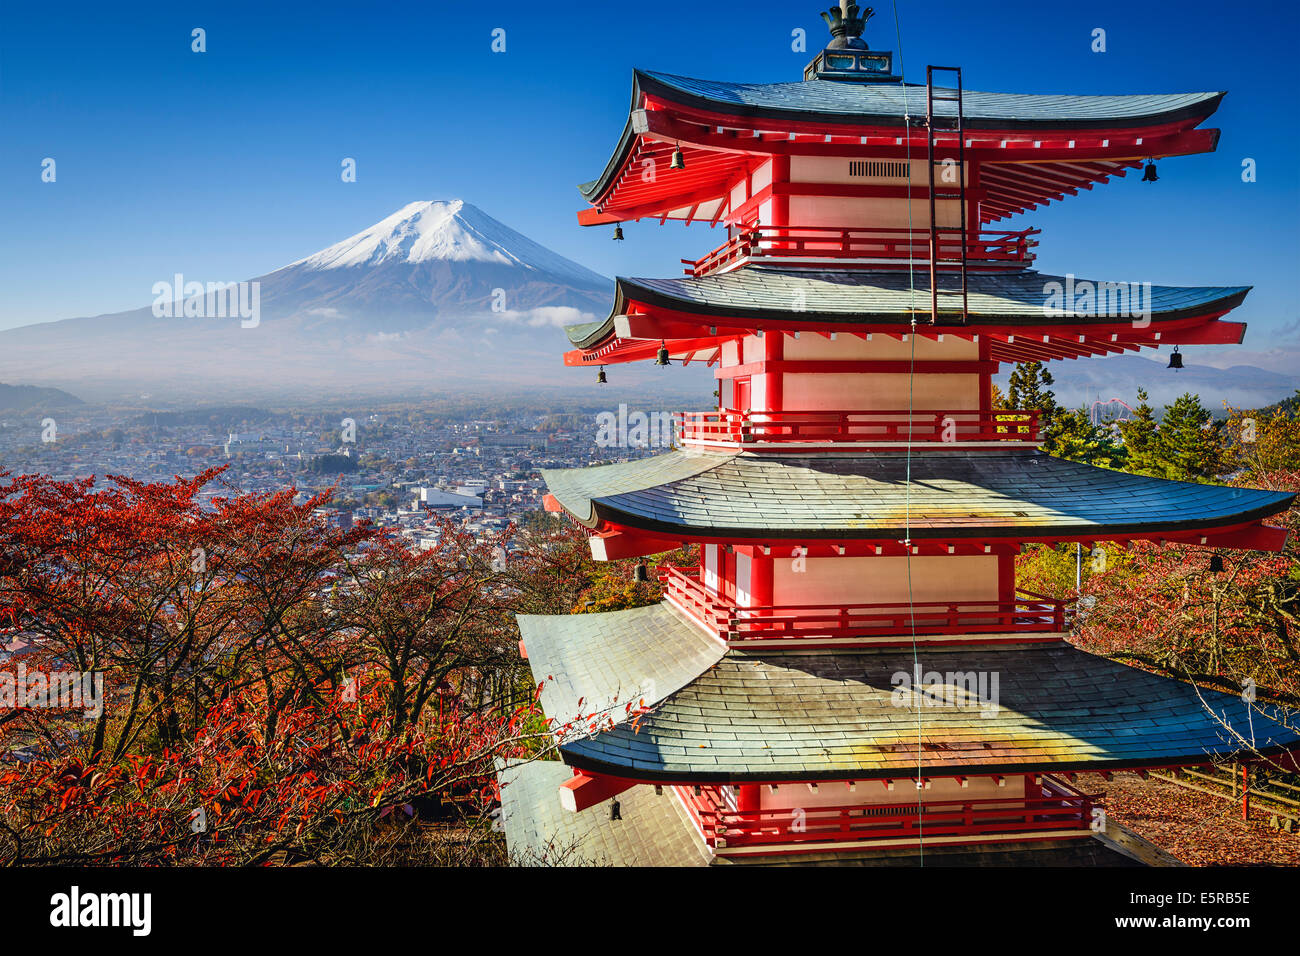 Mt. Fuji and Pagoda during the fall season in Japan. Stock Photo